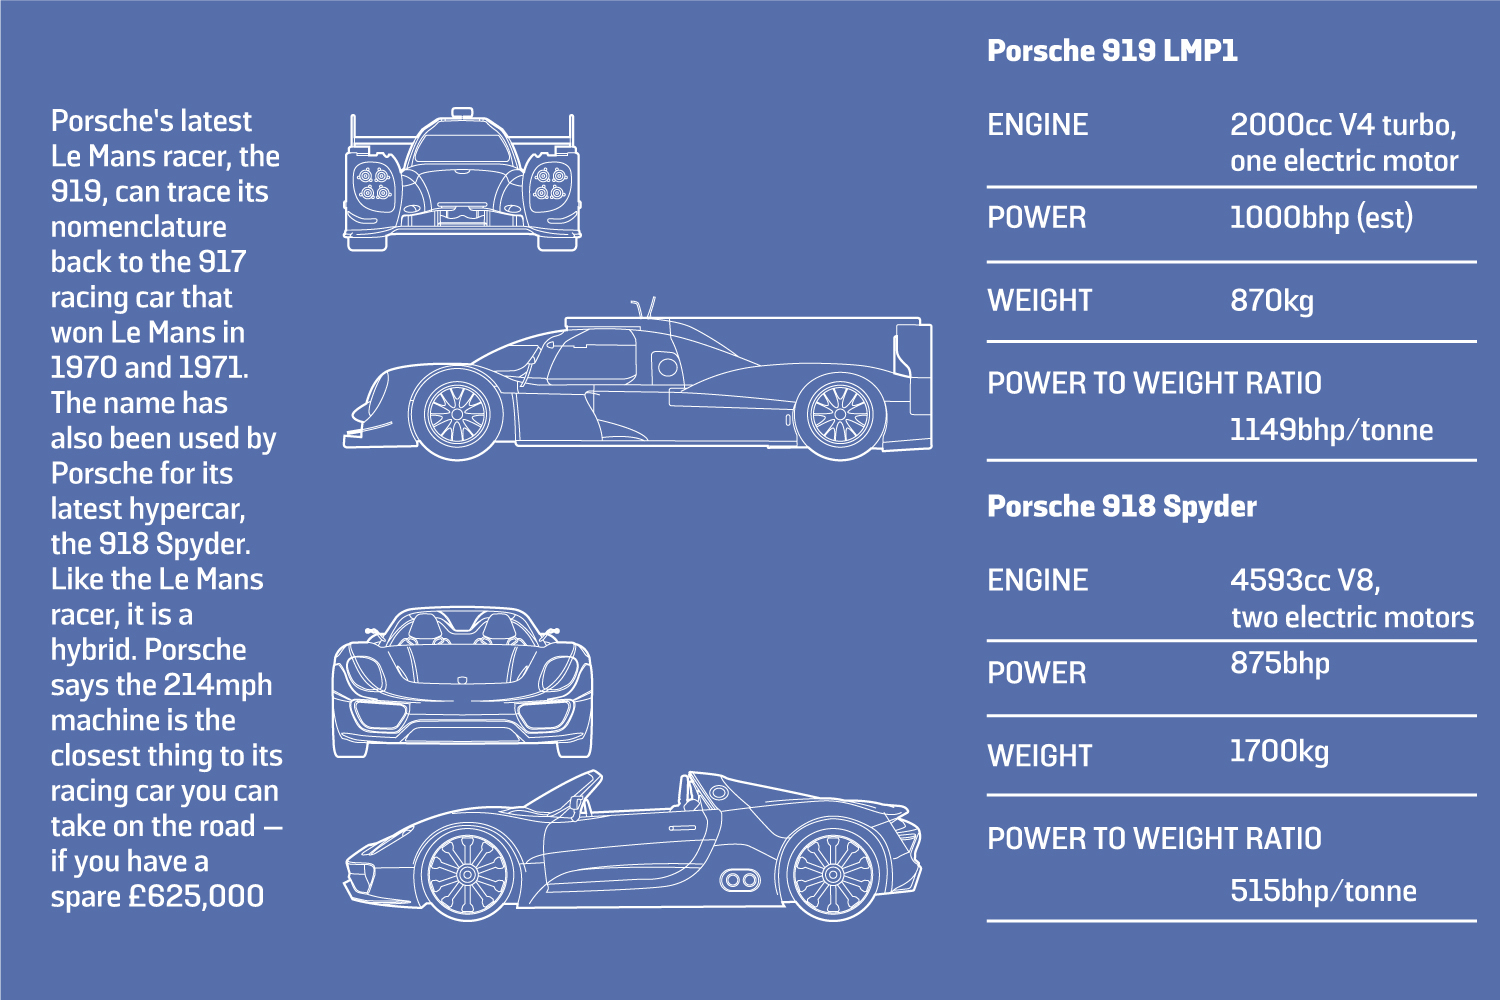 2015 Porsche 919 LMP1 hybrid Le Mans racing car specifications vs 918 Spyder road car